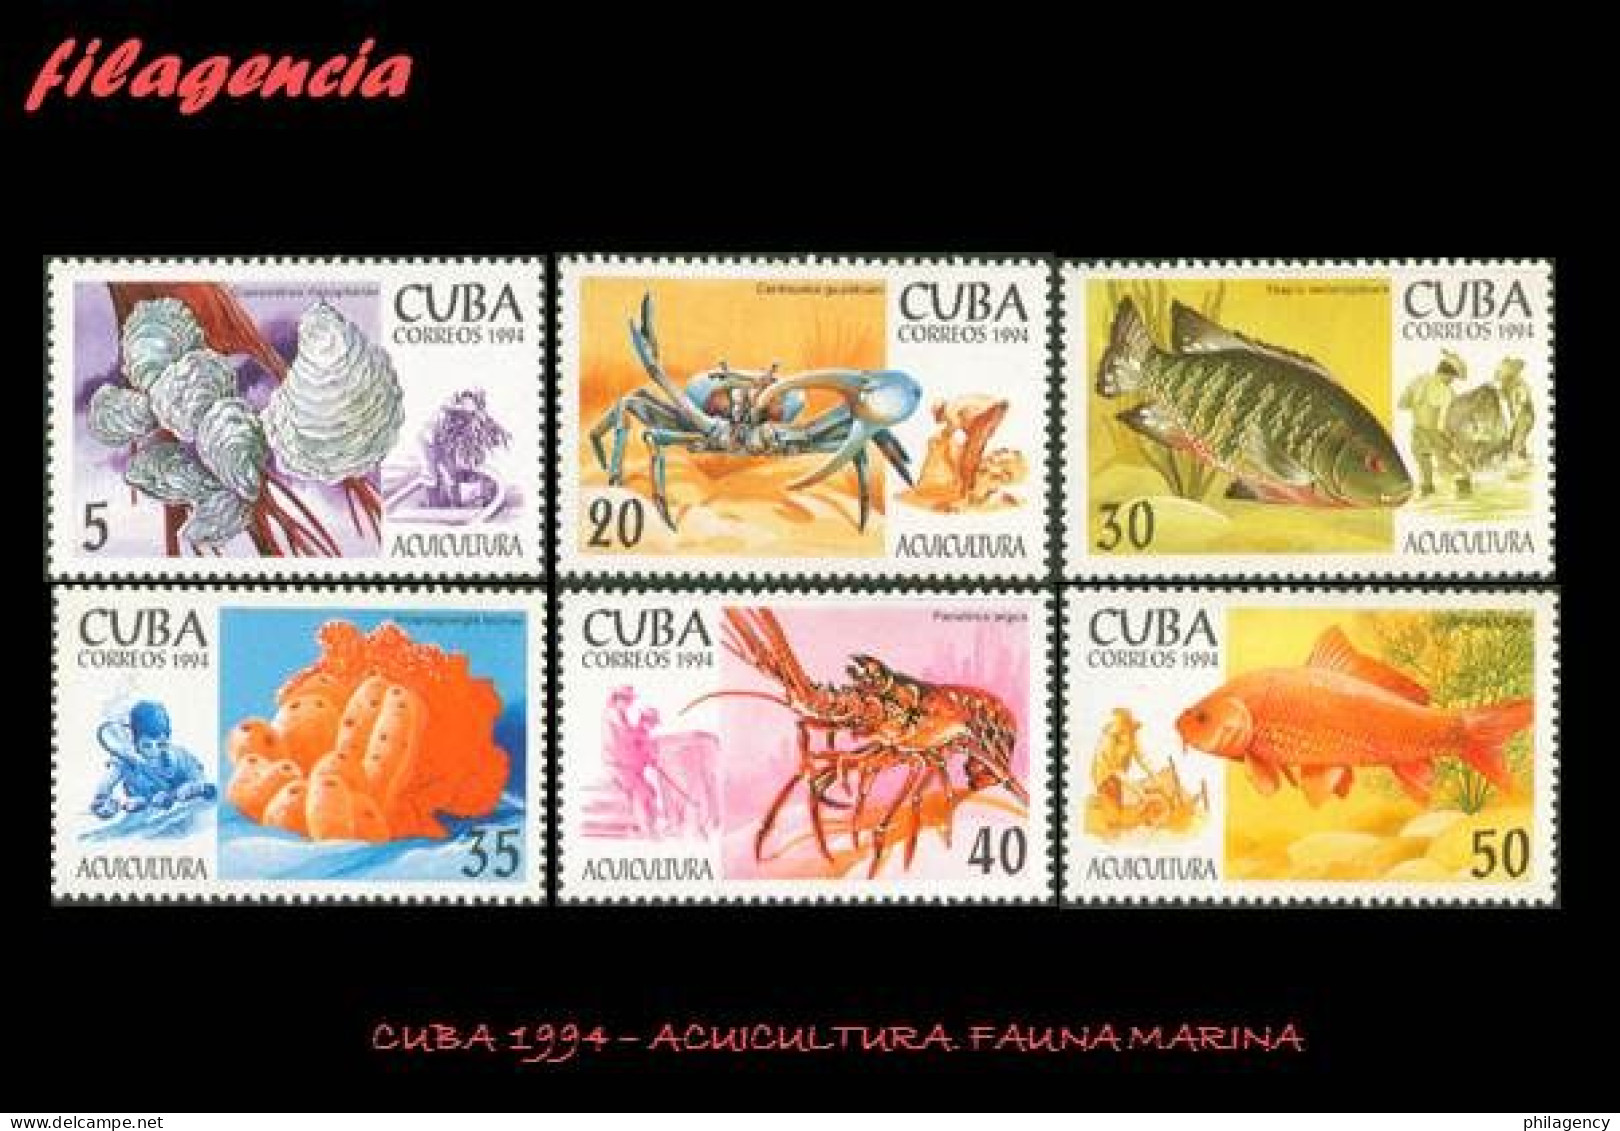 CUBA MINT. 1994-06 ACUICULTURA. FAUNA MARINA - Unused Stamps